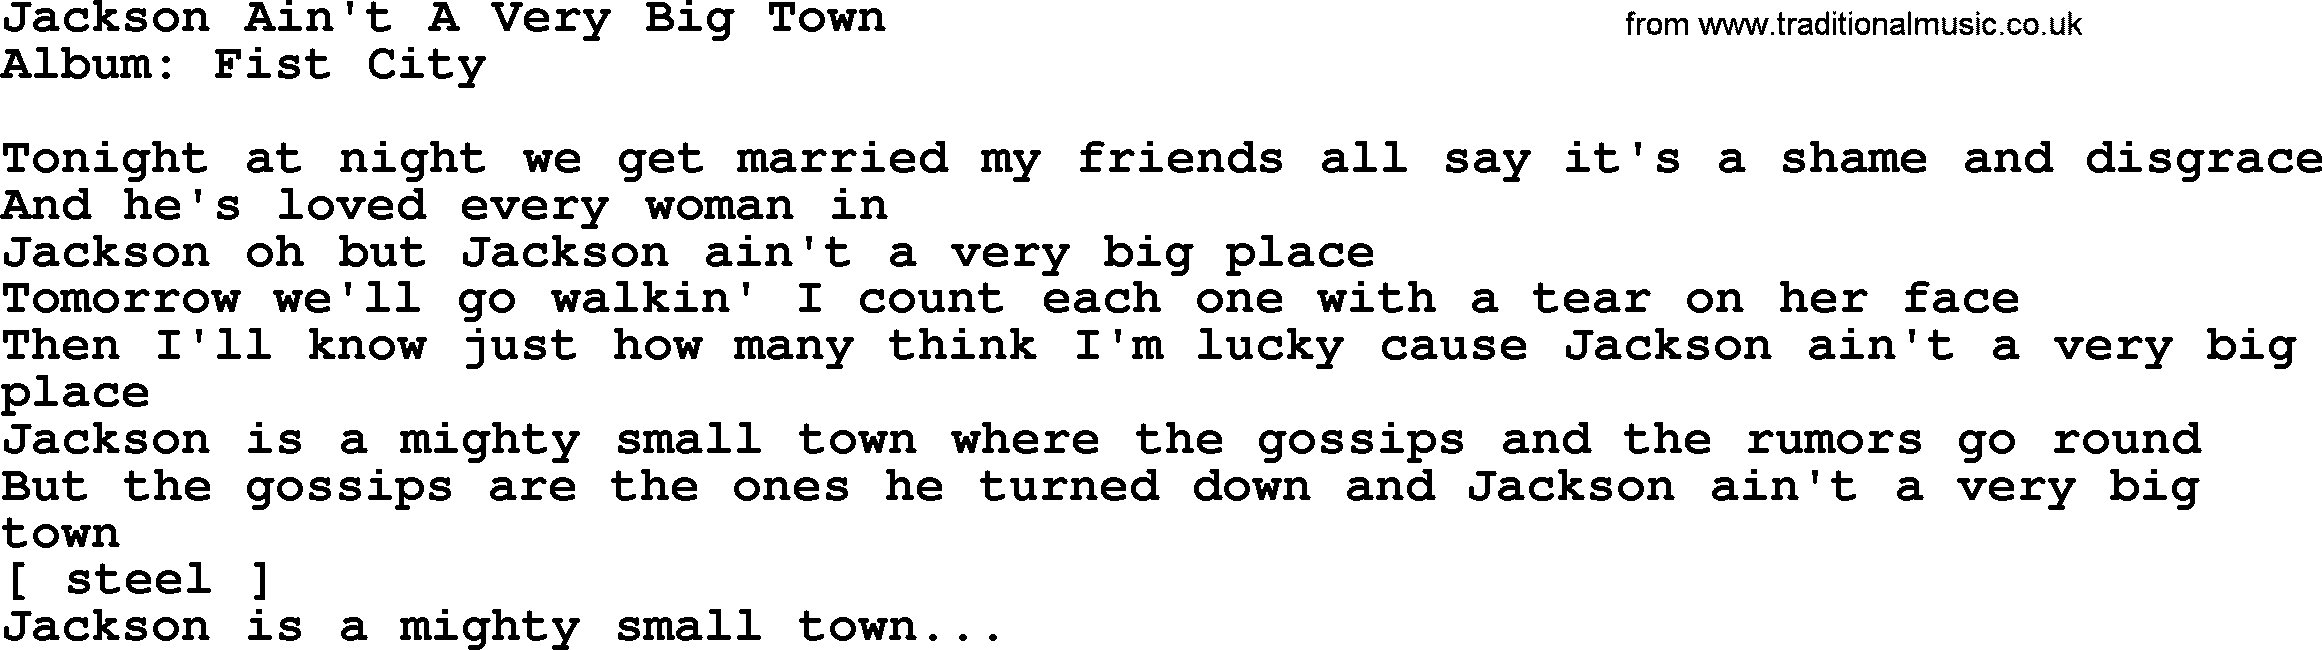 Loretta Lynn song: Jackson Ain't A Very Big Town lyrics